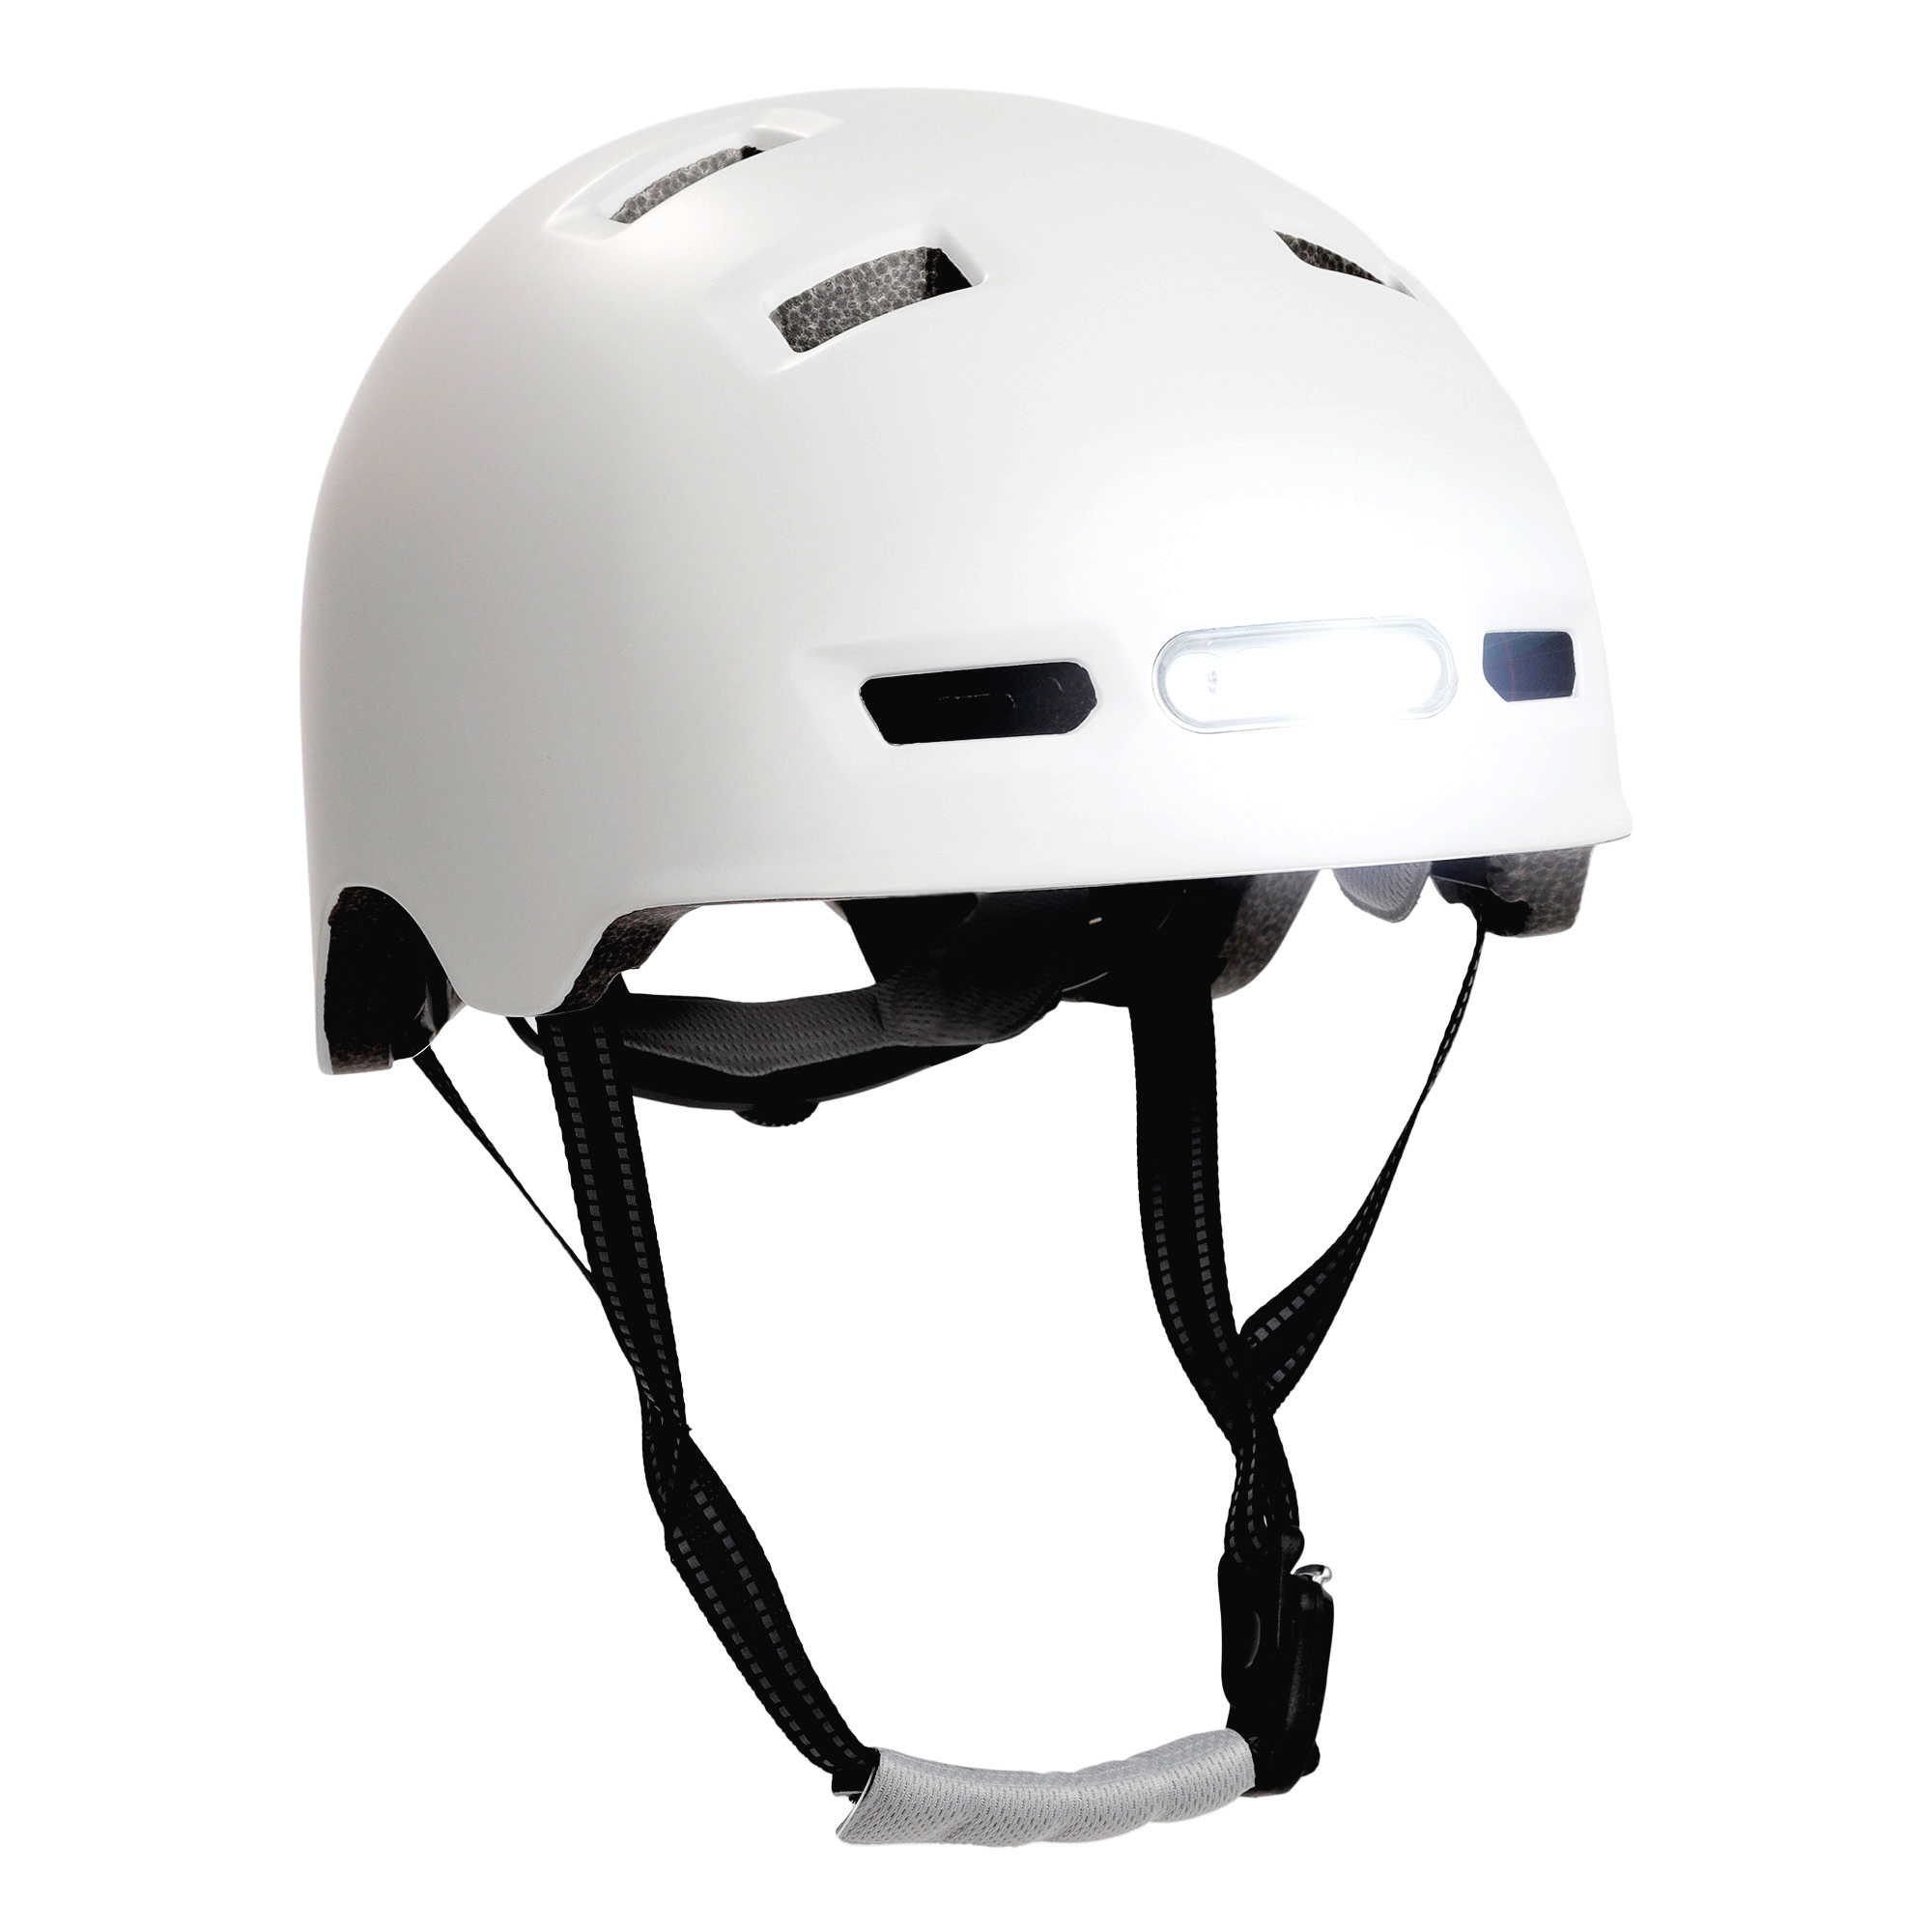 Capacete De Bicicleta De Skater Com Luz Frontal E Traseira | Branco M(54-57cm) - blanco - 